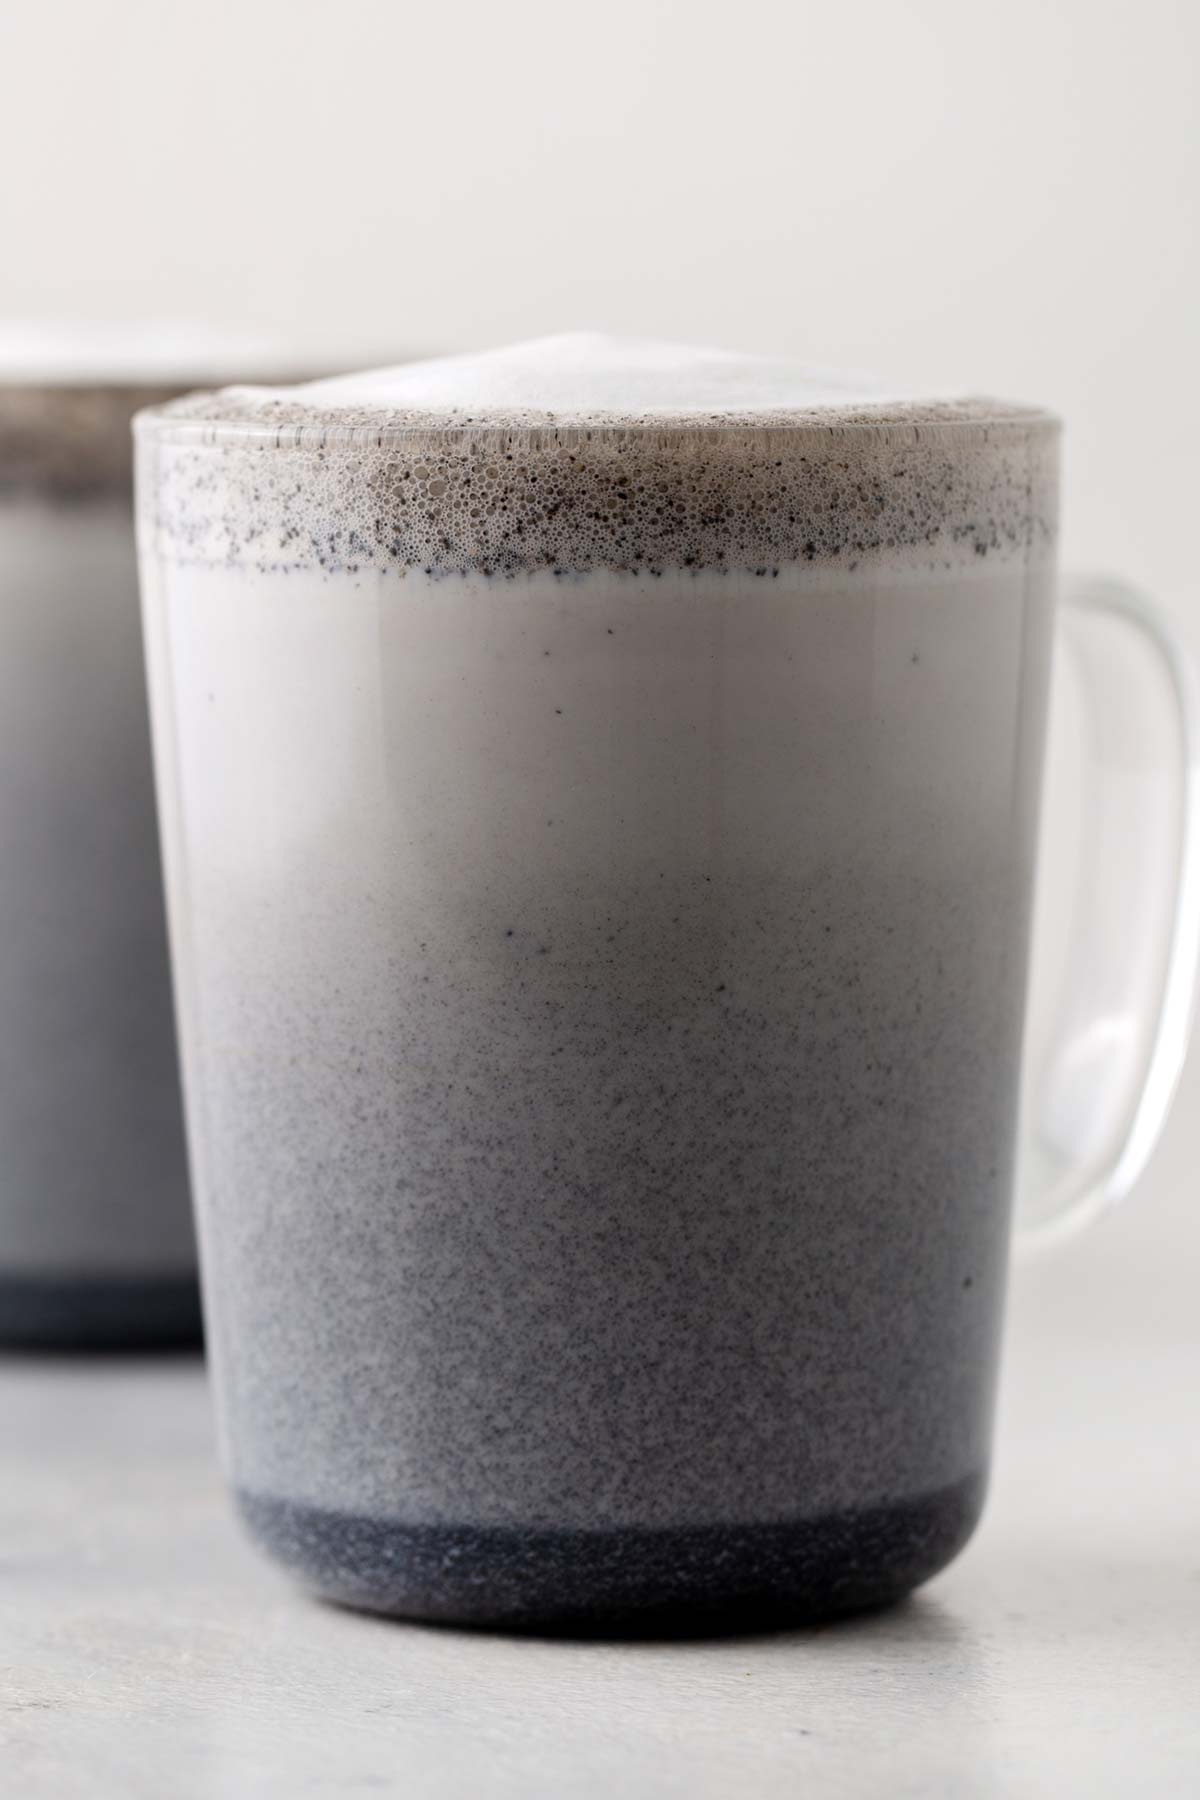 Black Sesame Latte in clear mug.